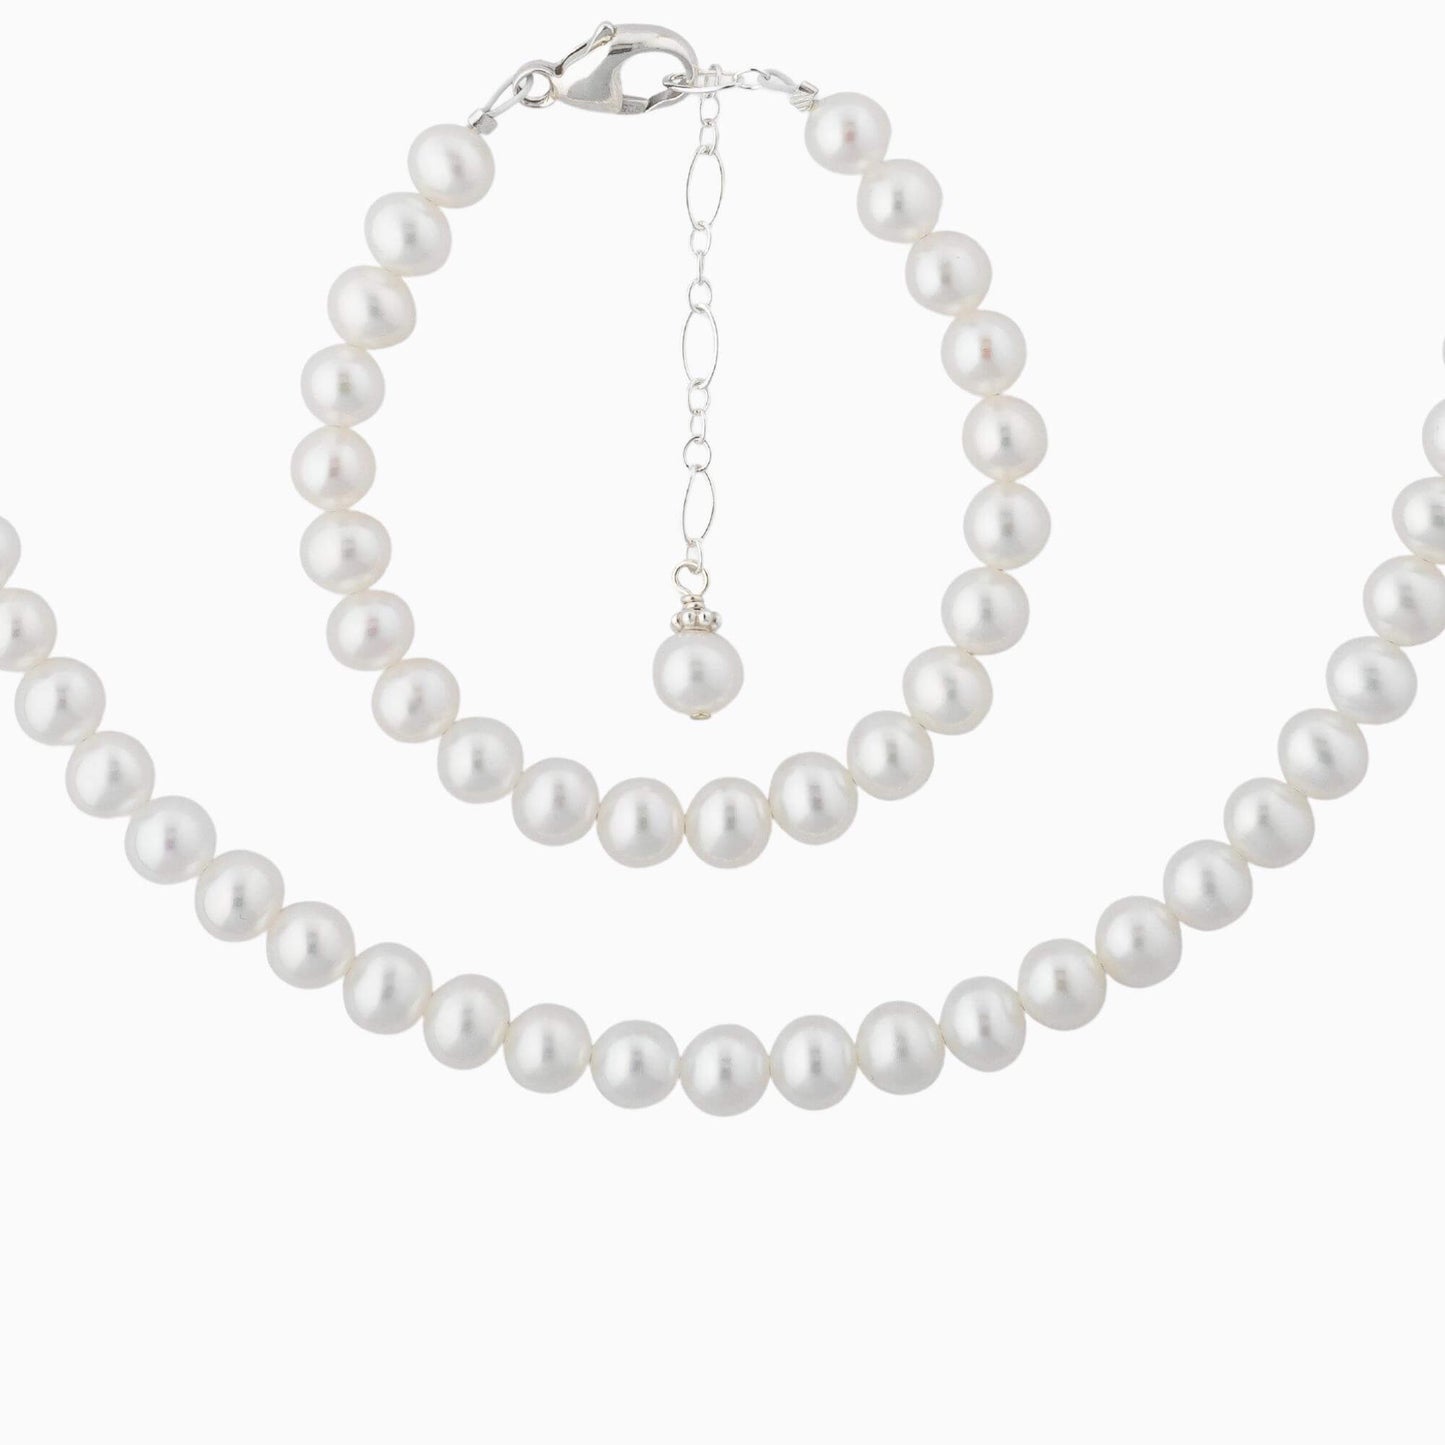 Sweet Pearl Jewelry Set in Silver